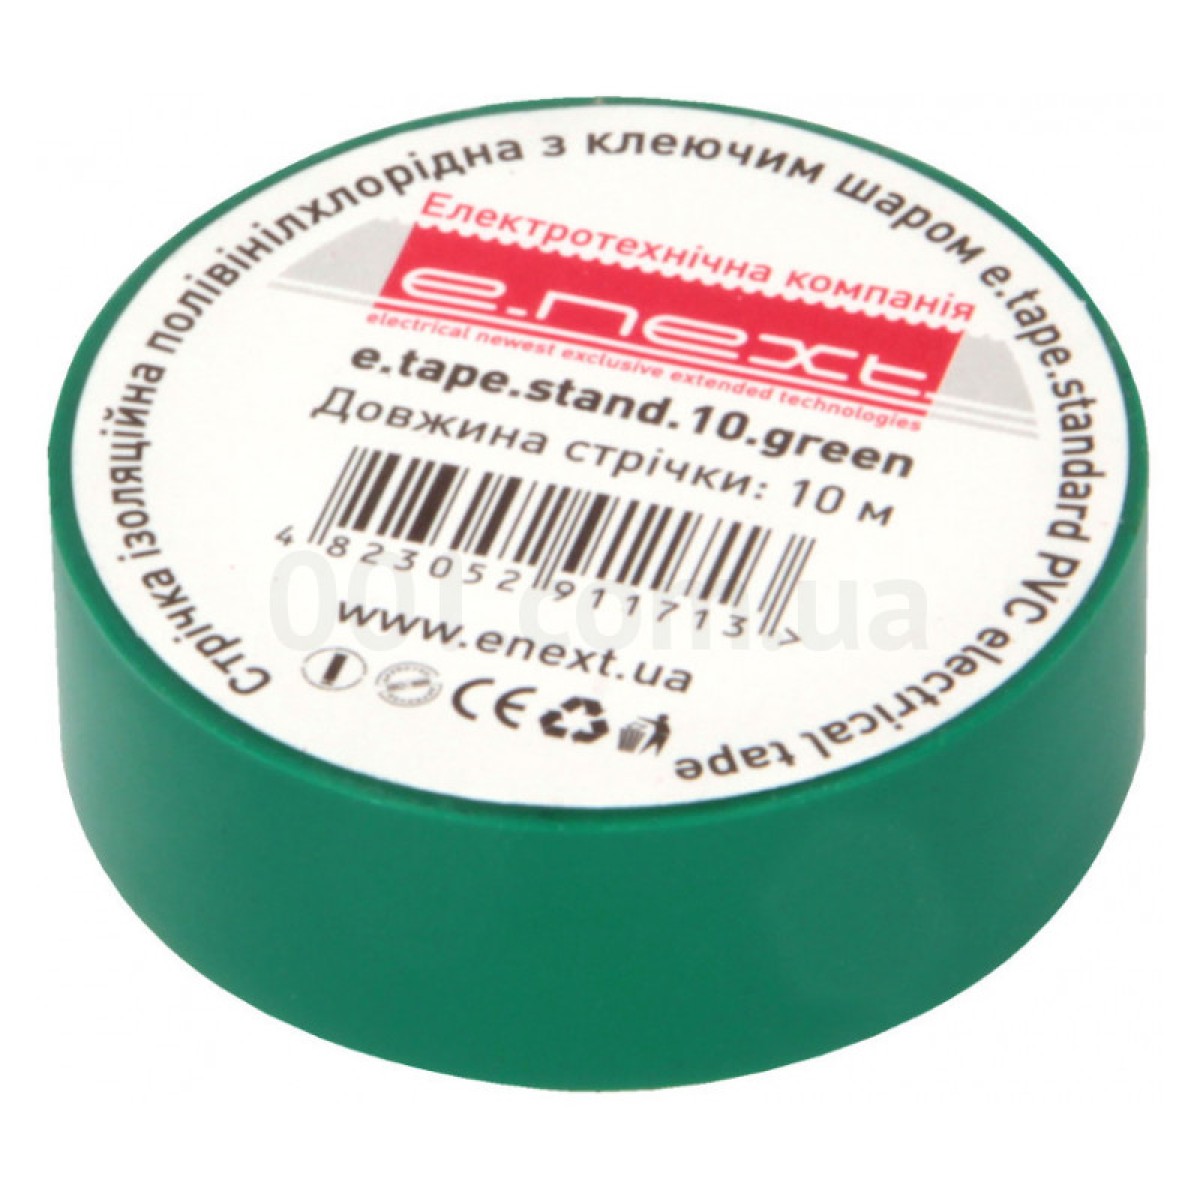 Изолента 0,13×19 мм зеленая (10 м) e.tape.stand.10.green, E.NEXT 256_256.jpg